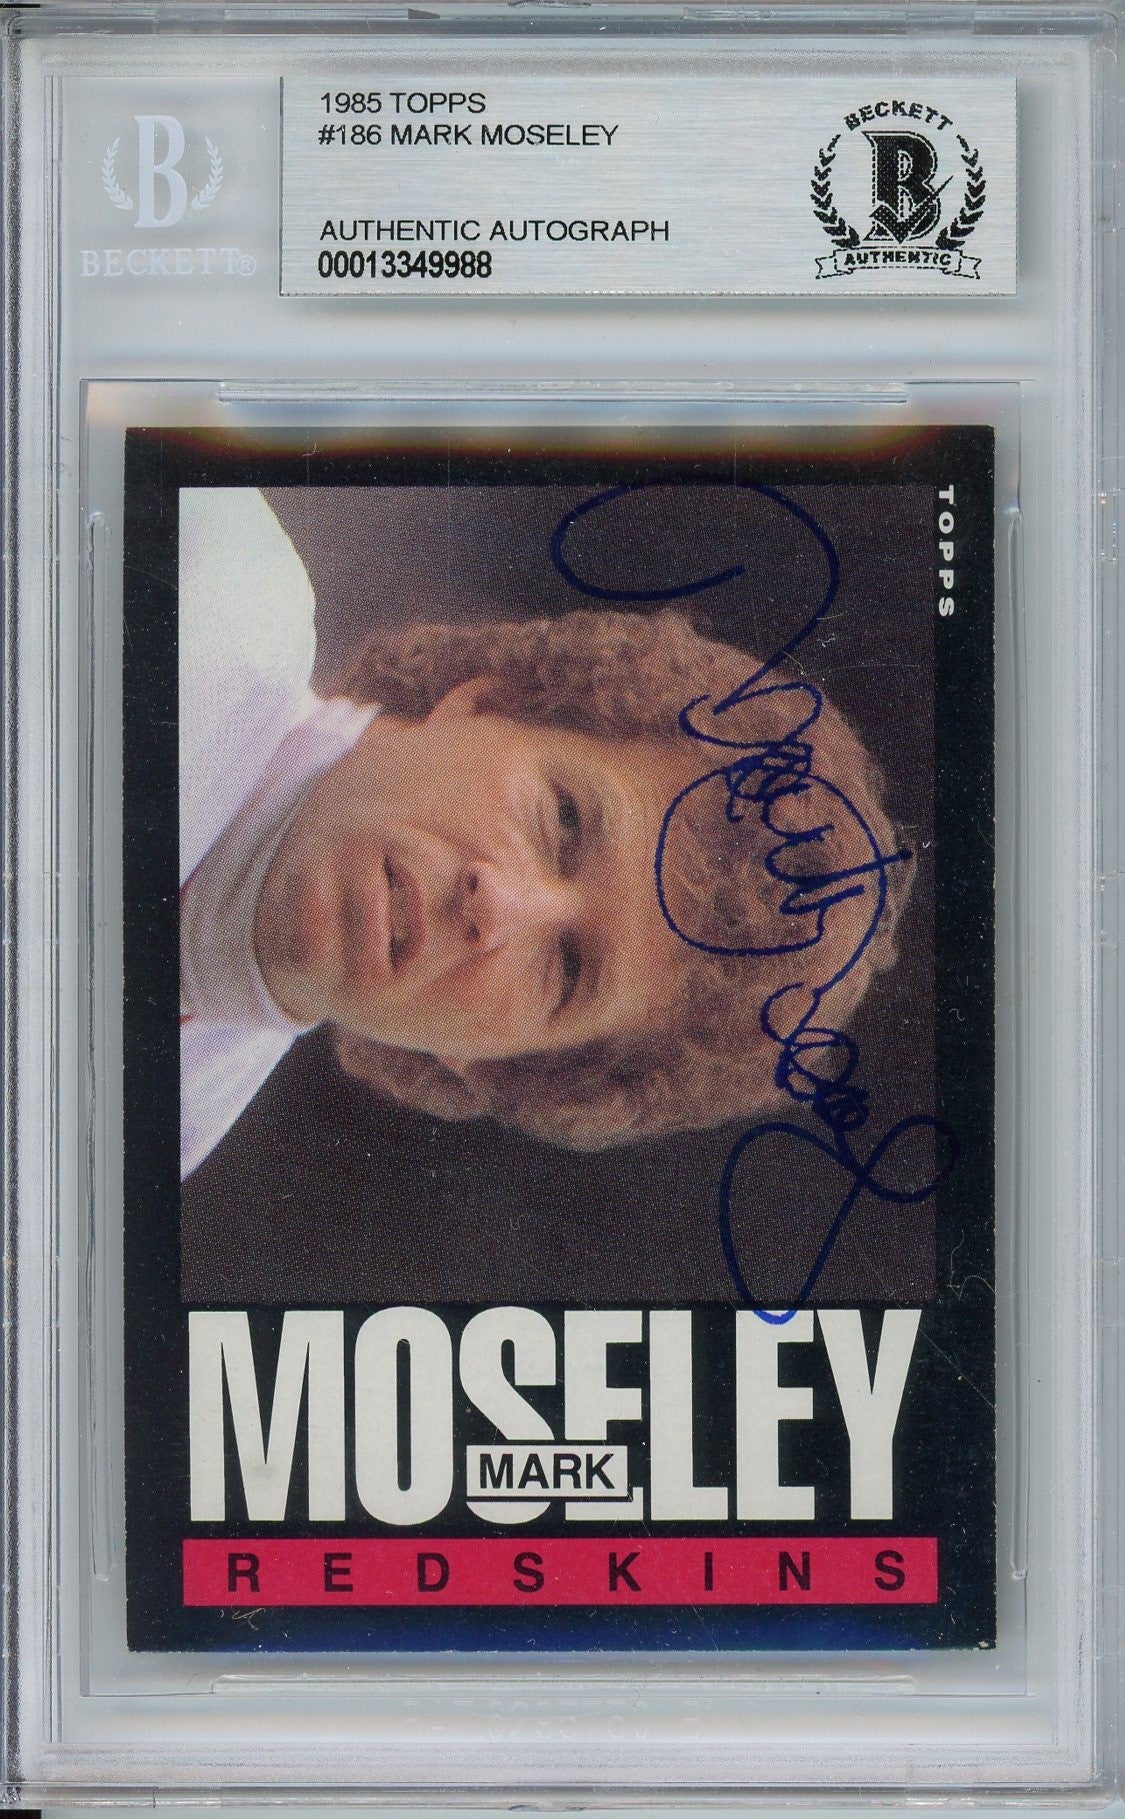 1985 TOPPS MARK MOSELEY AUTO CARD BAS (9988)